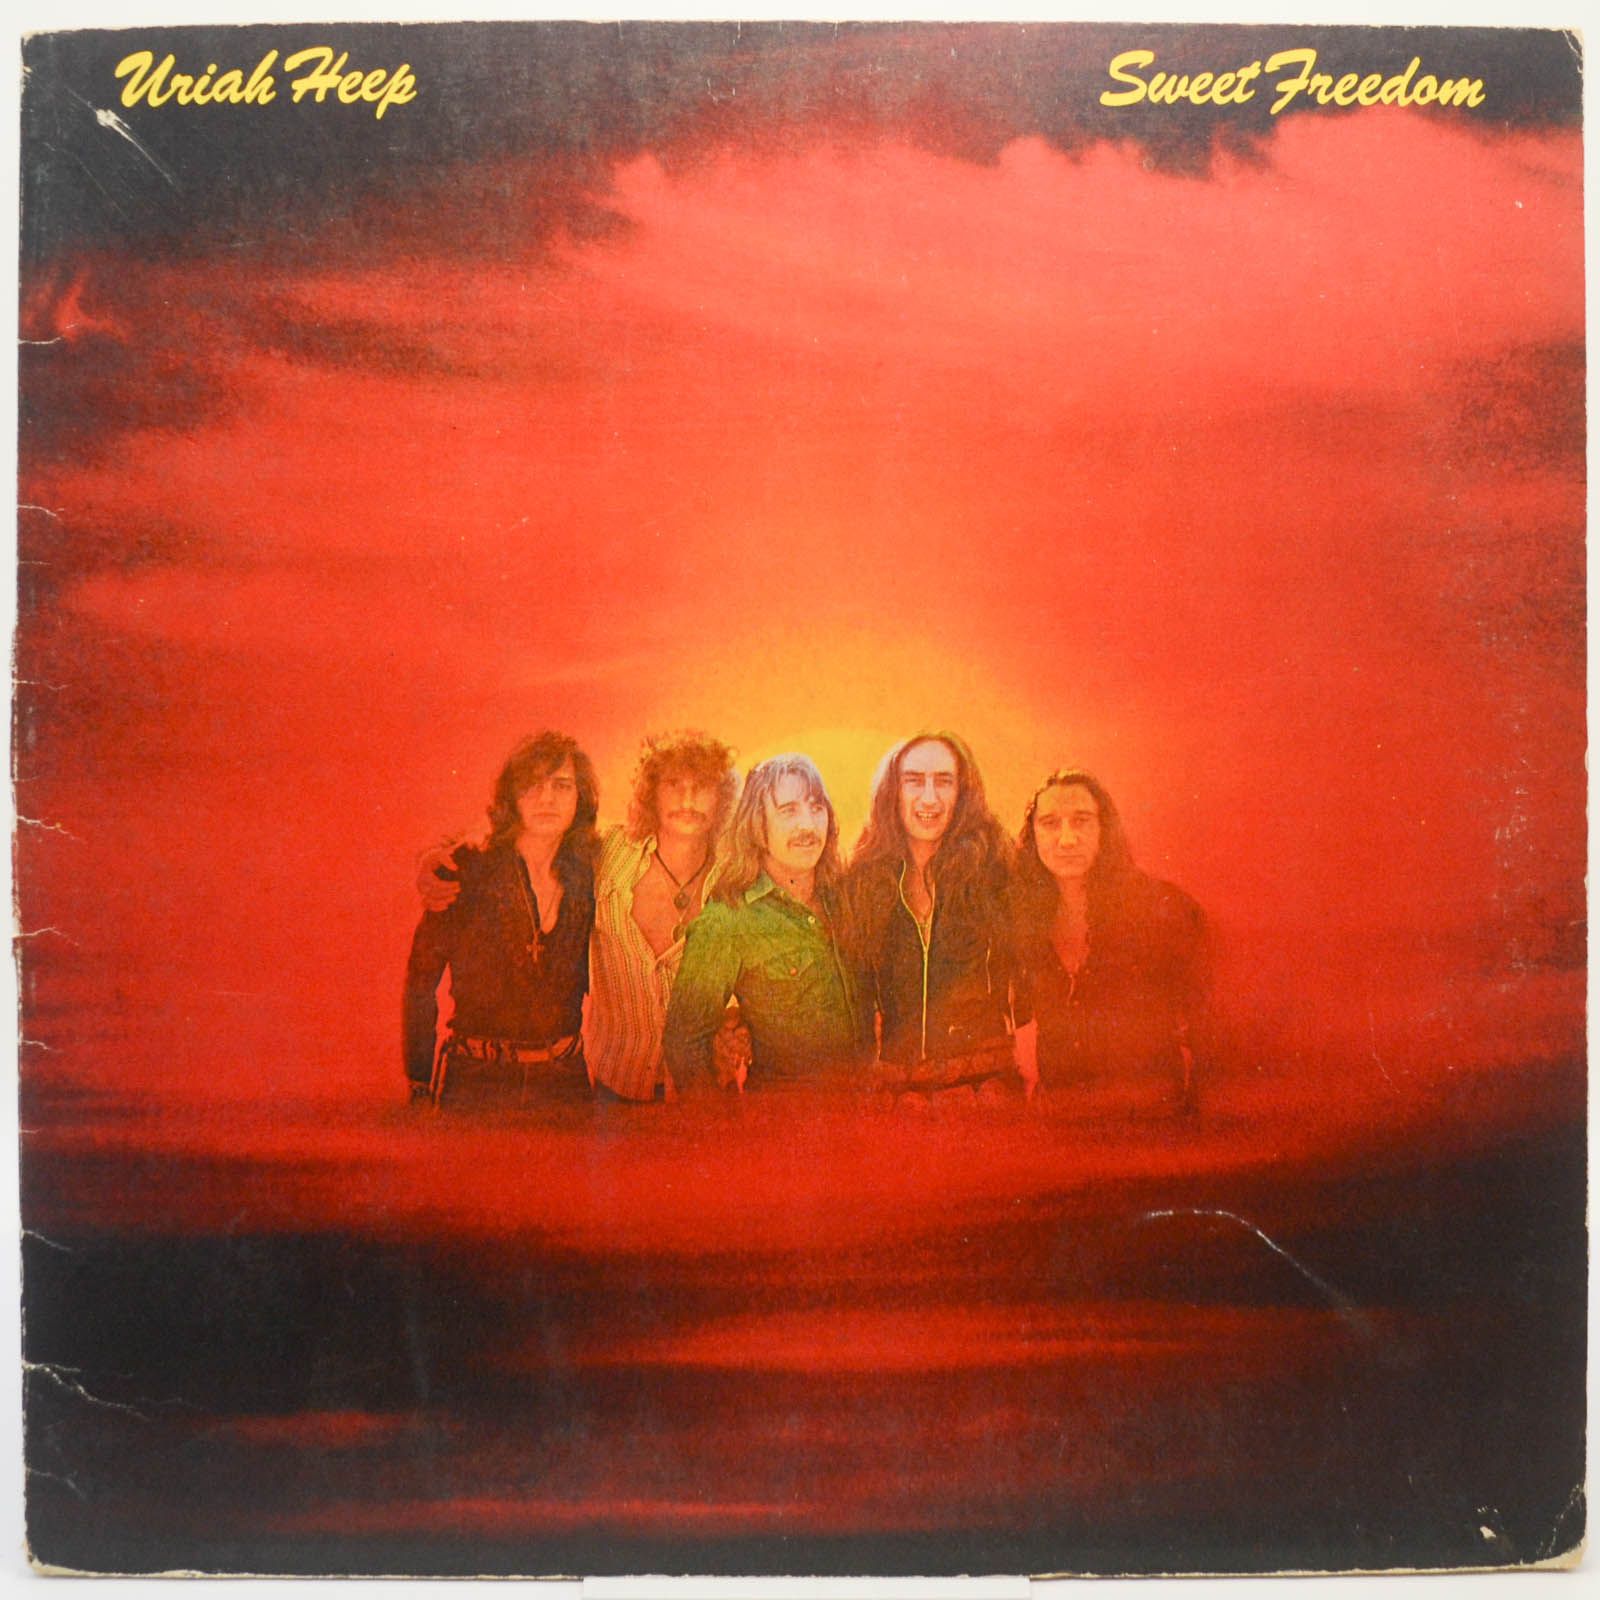 Uriah Heep — Sweet Freedom, 1973